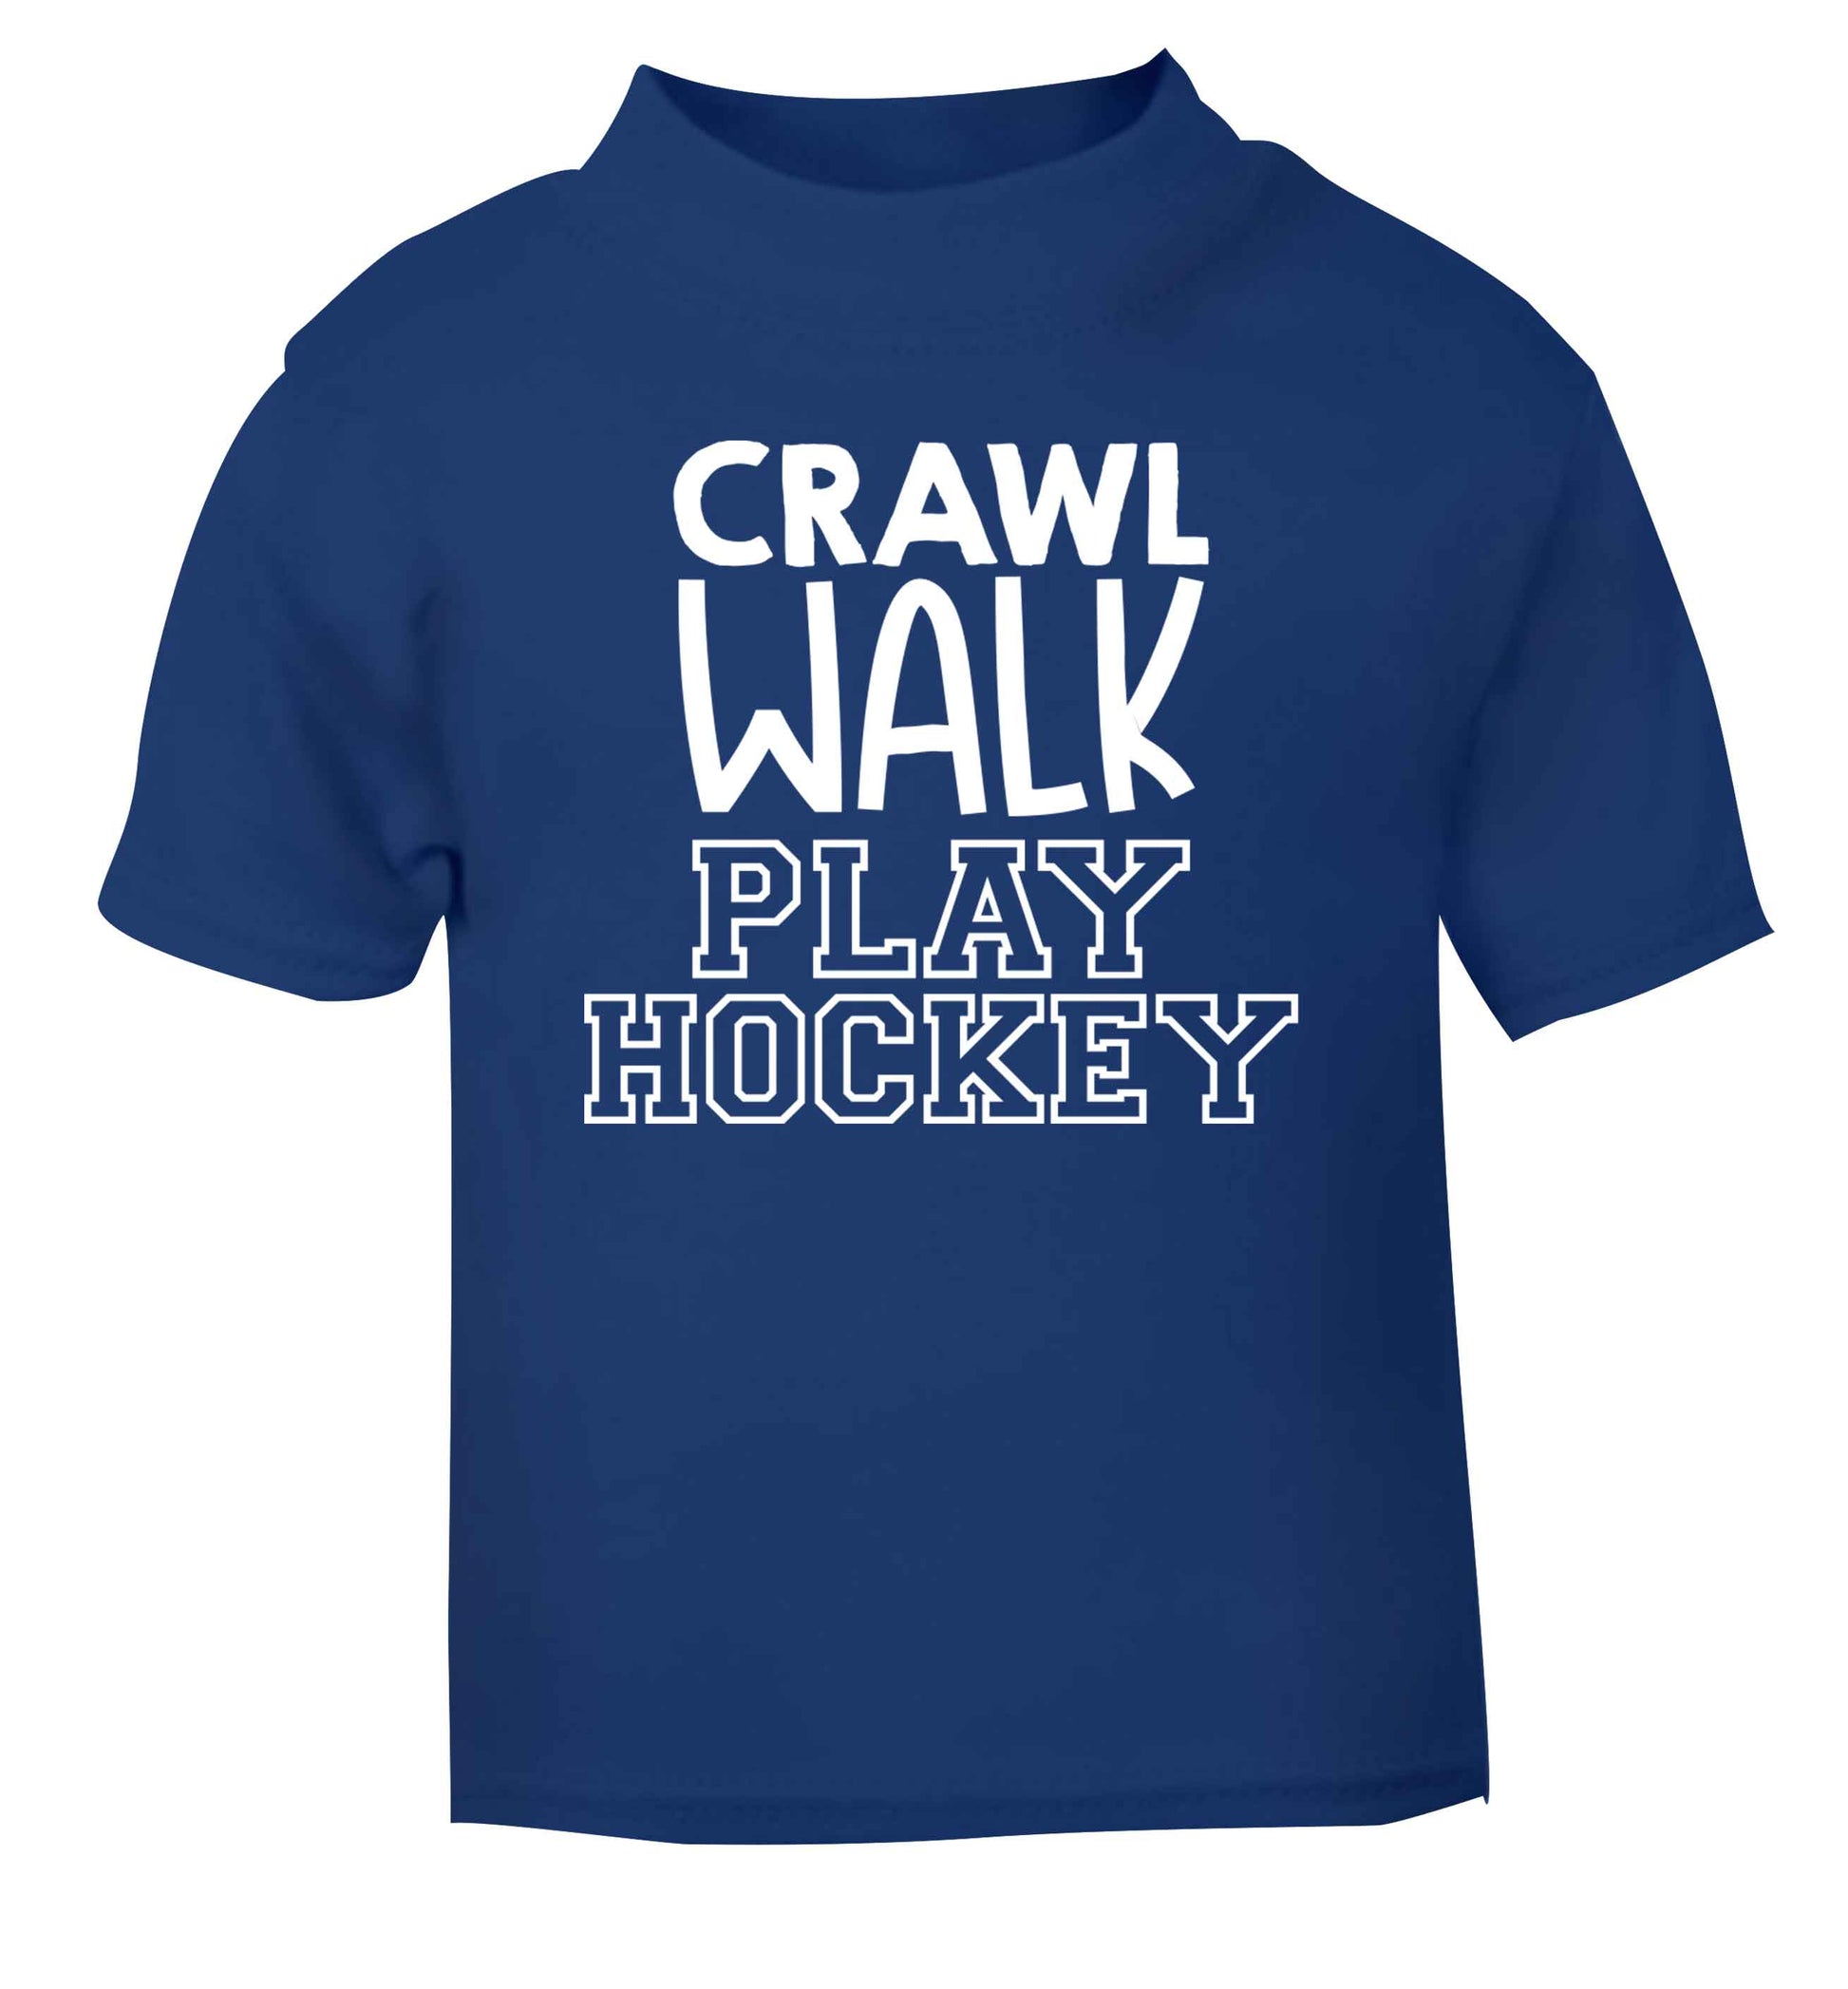 Crawl walk play hockey blue Baby Toddler Tshirt 2 Years